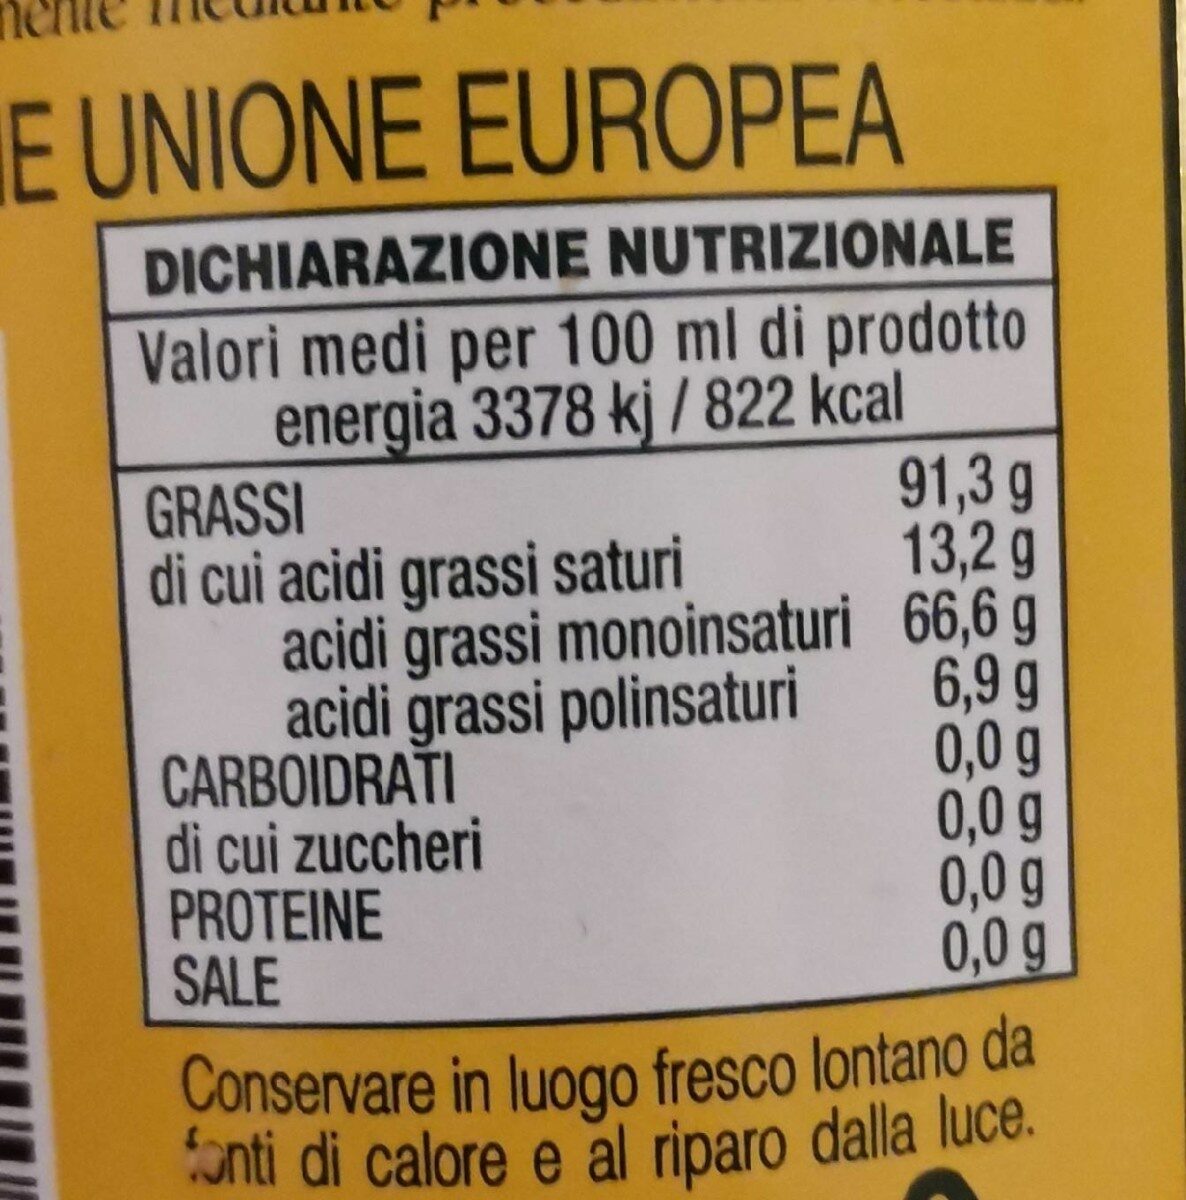 Olio extra vergine di oliva san giovanni litro - Nährwertangaben